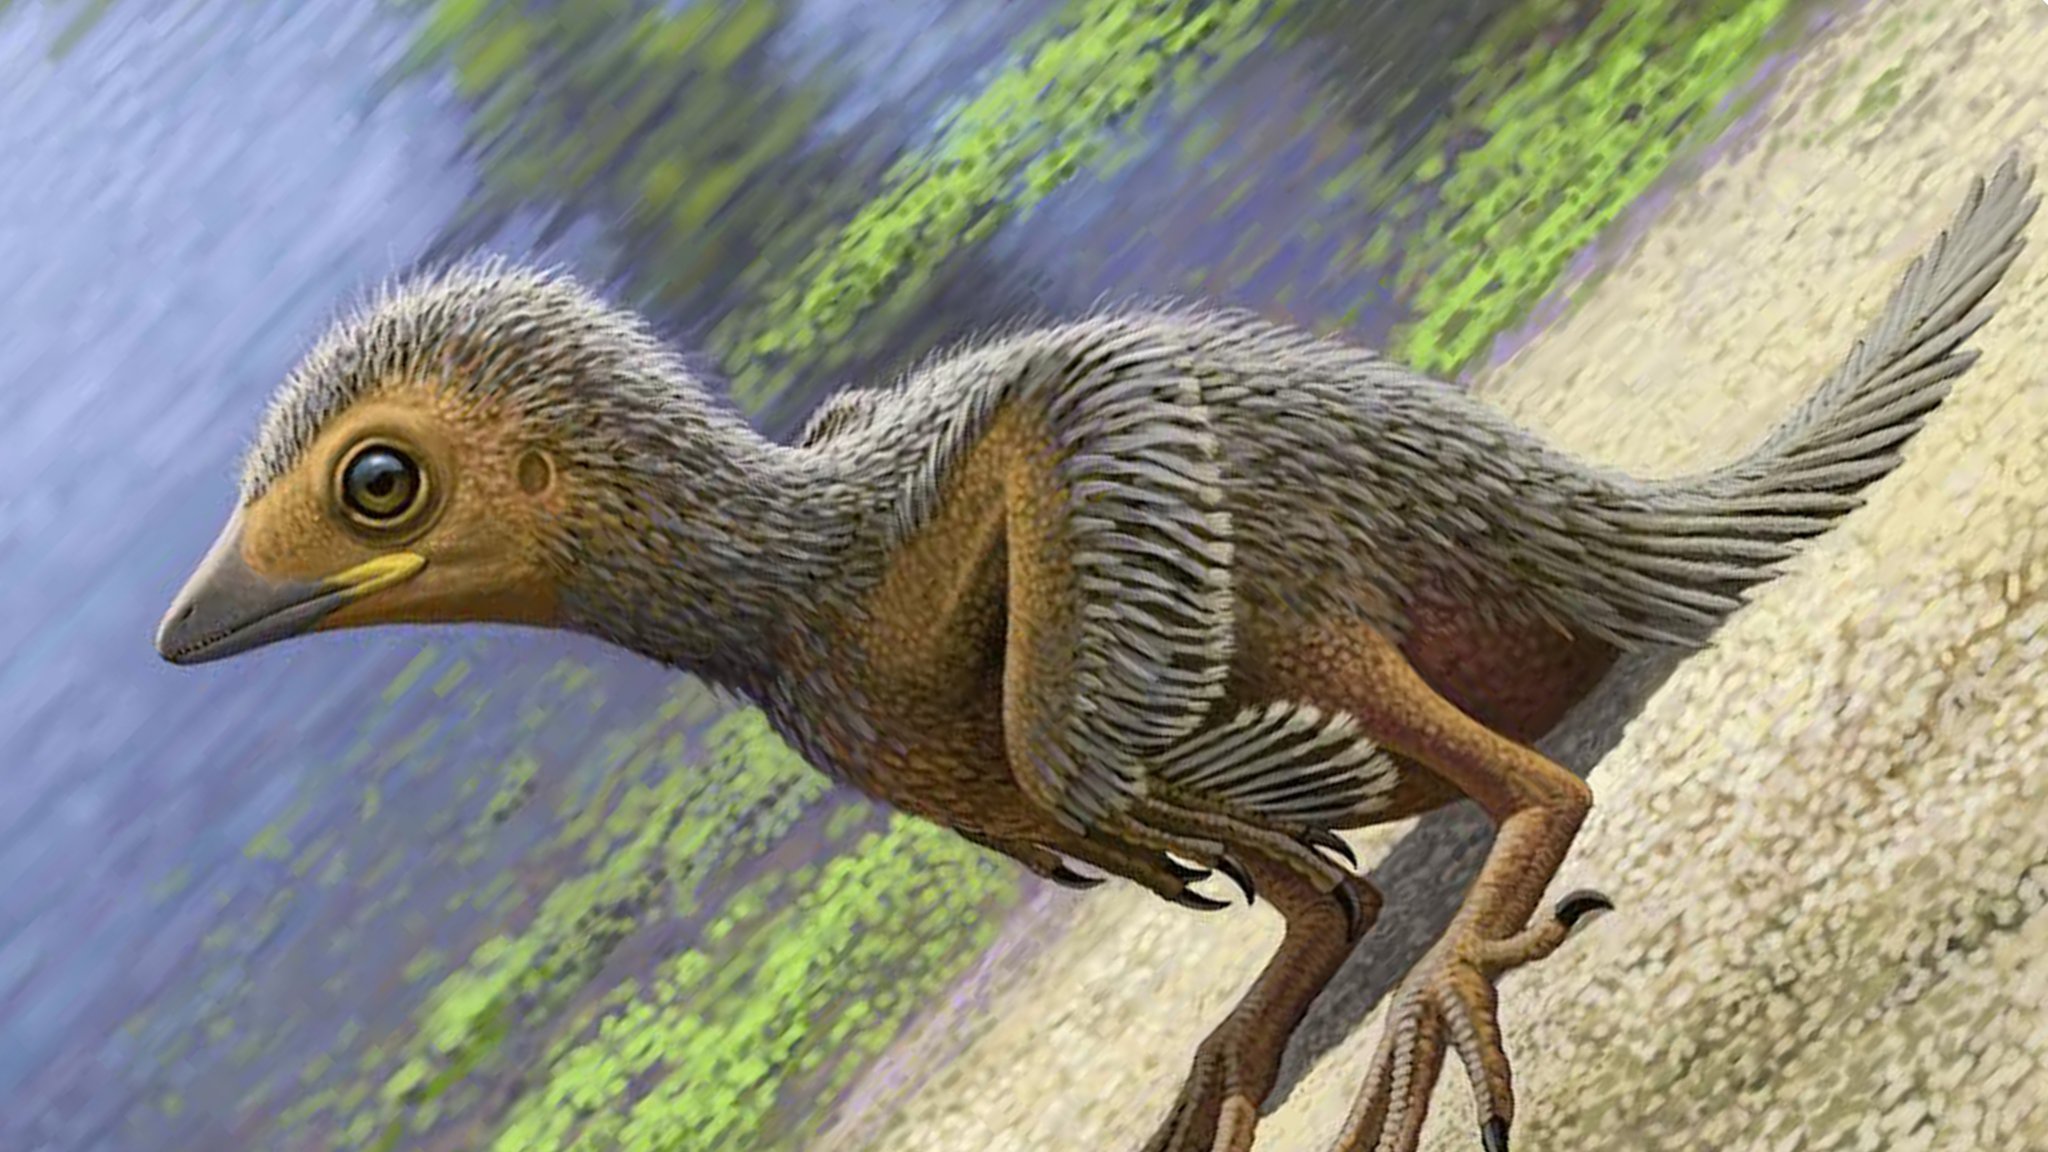 Baby bird fossil is 'rarest of the rare' - BBC News